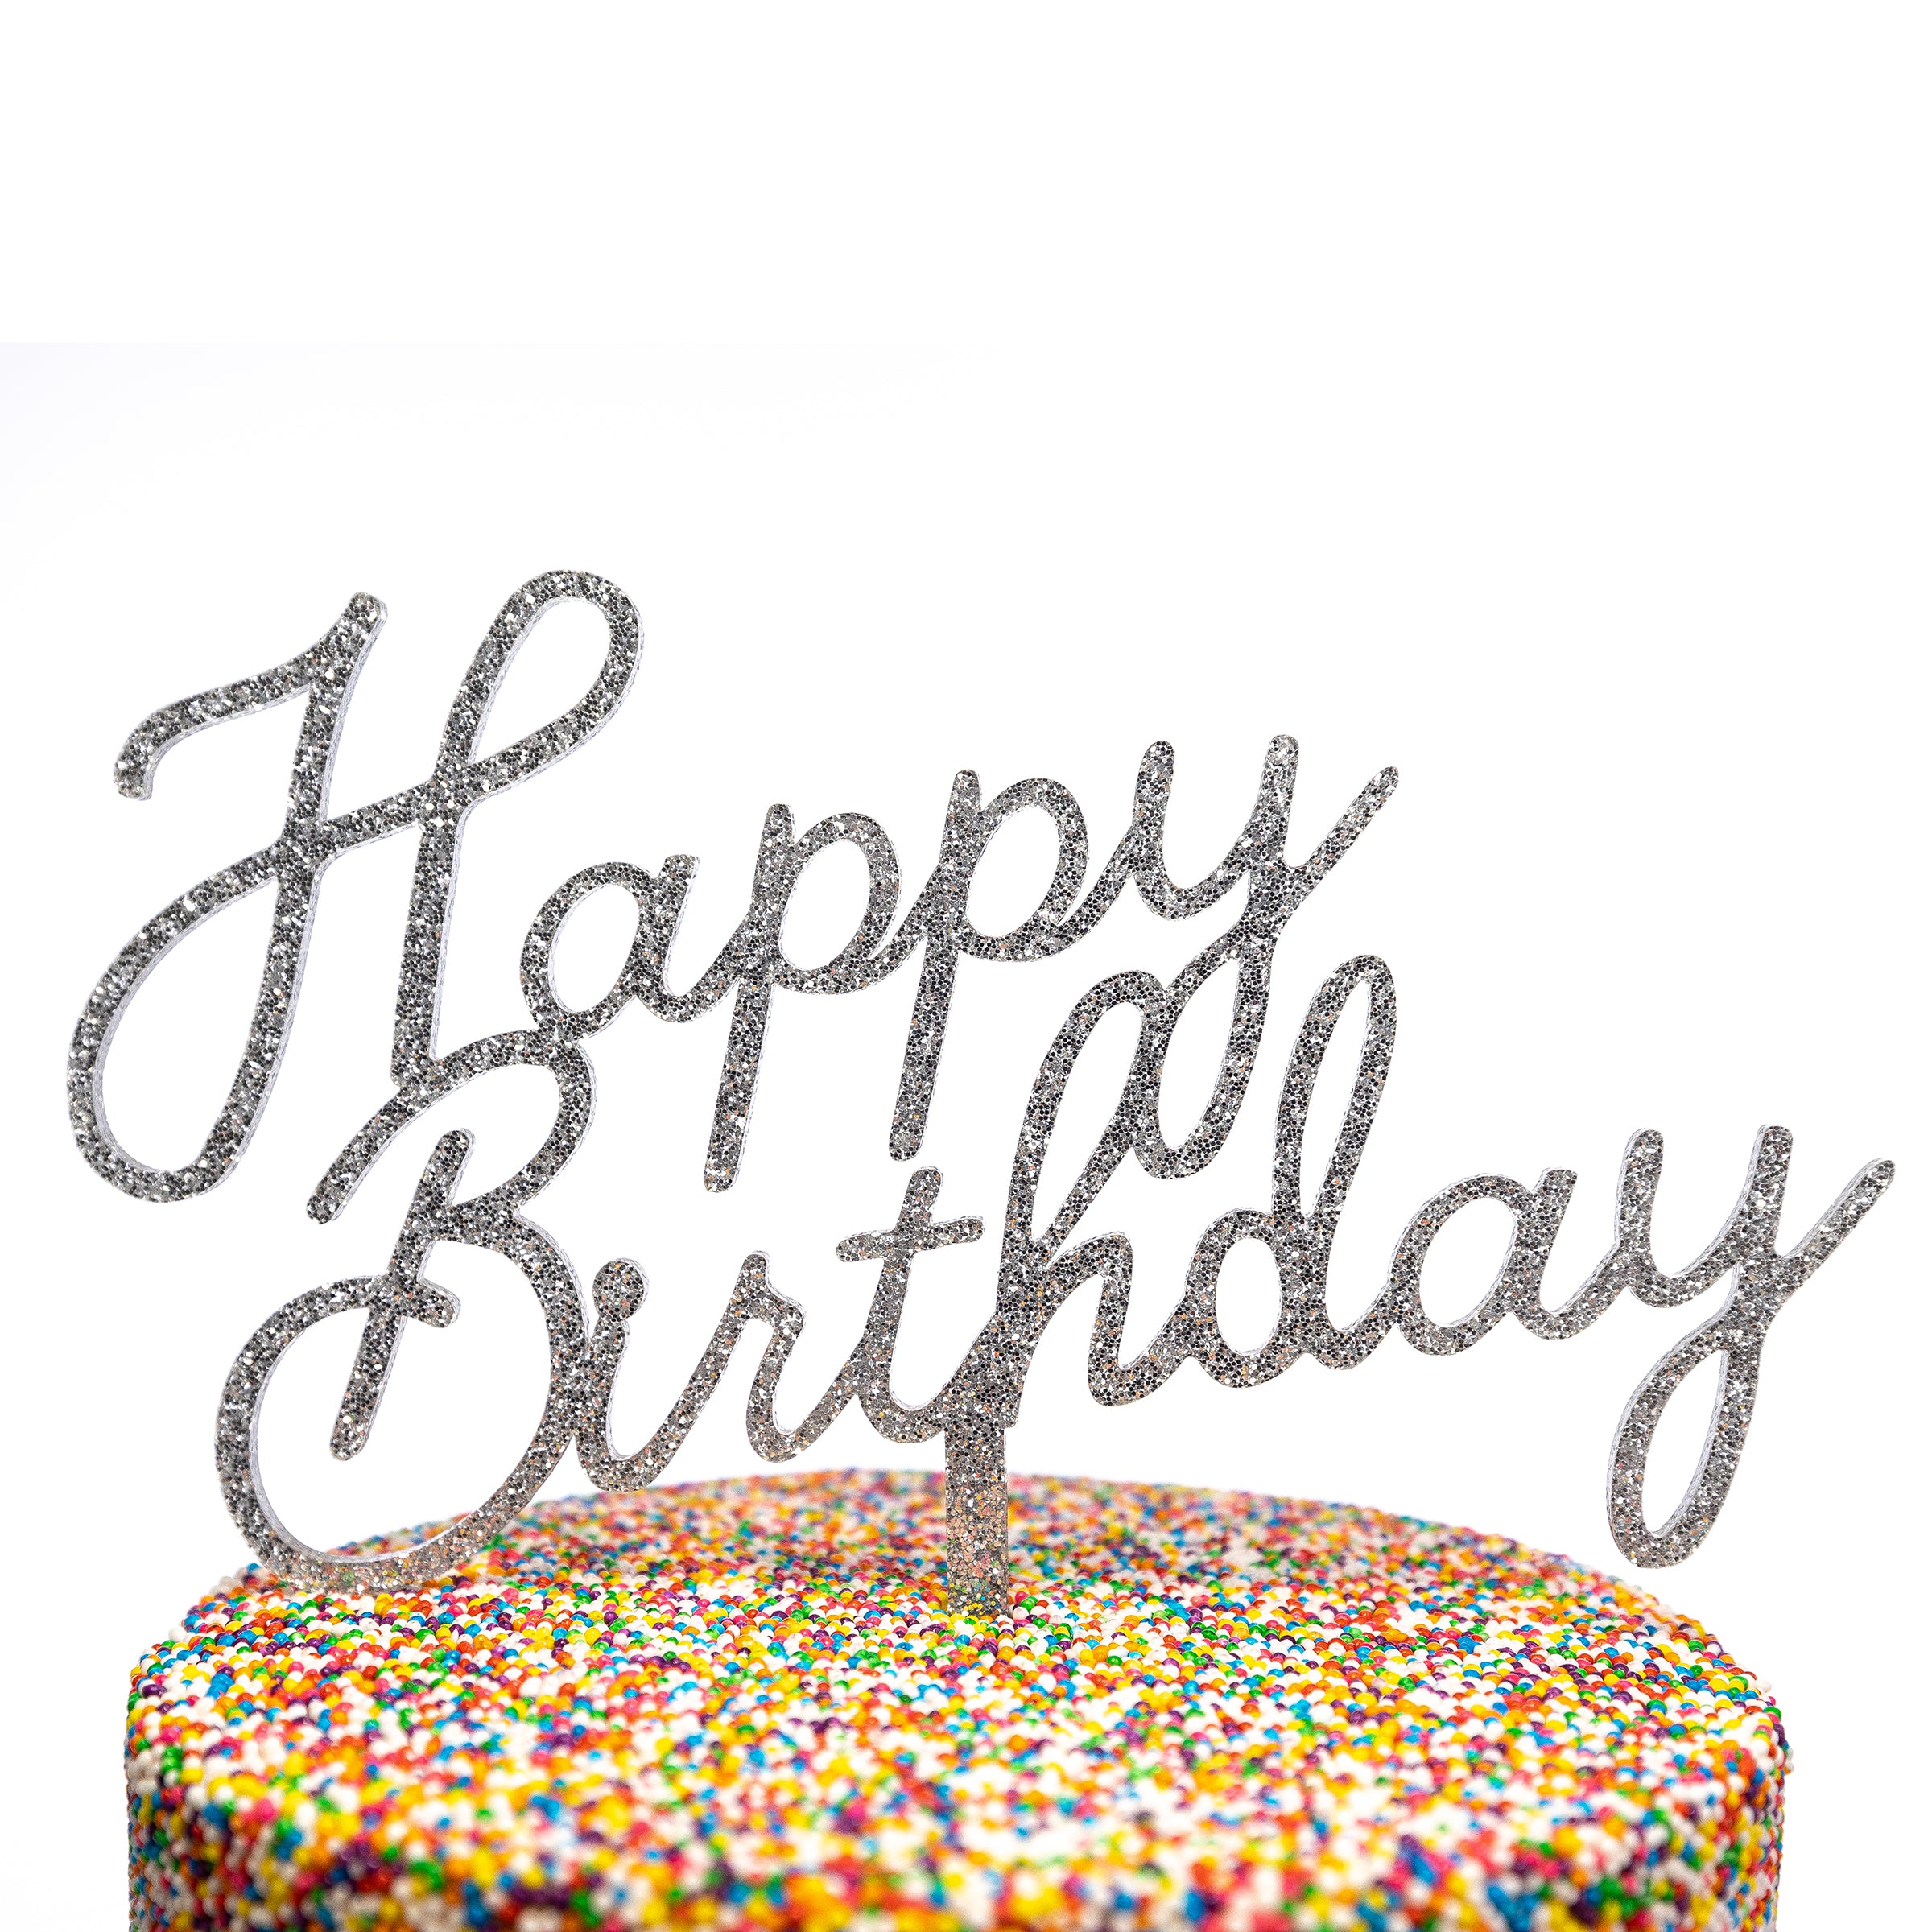 A Very Happy Birthday Cake Recipe | Easy Homemade Birthday Cake!